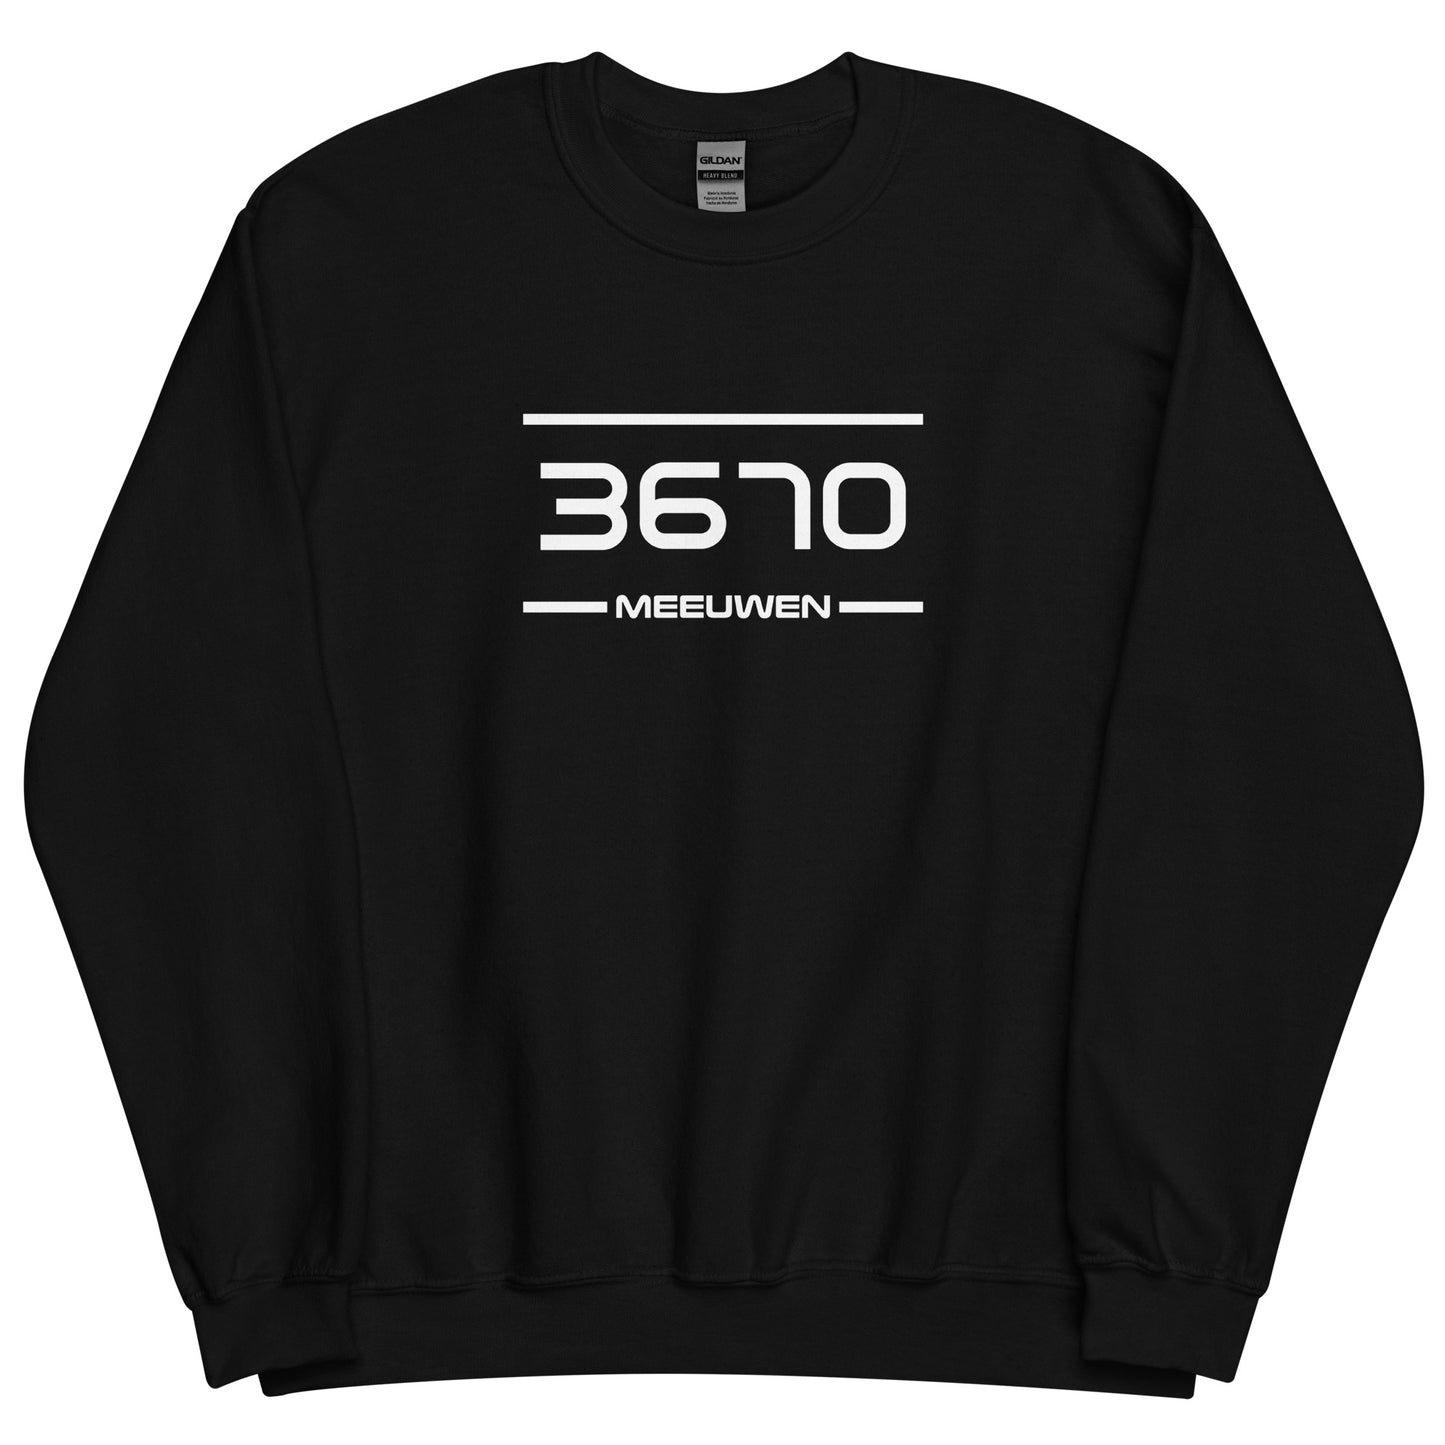 Sweater - 3670 - Meeuwen (M/V)